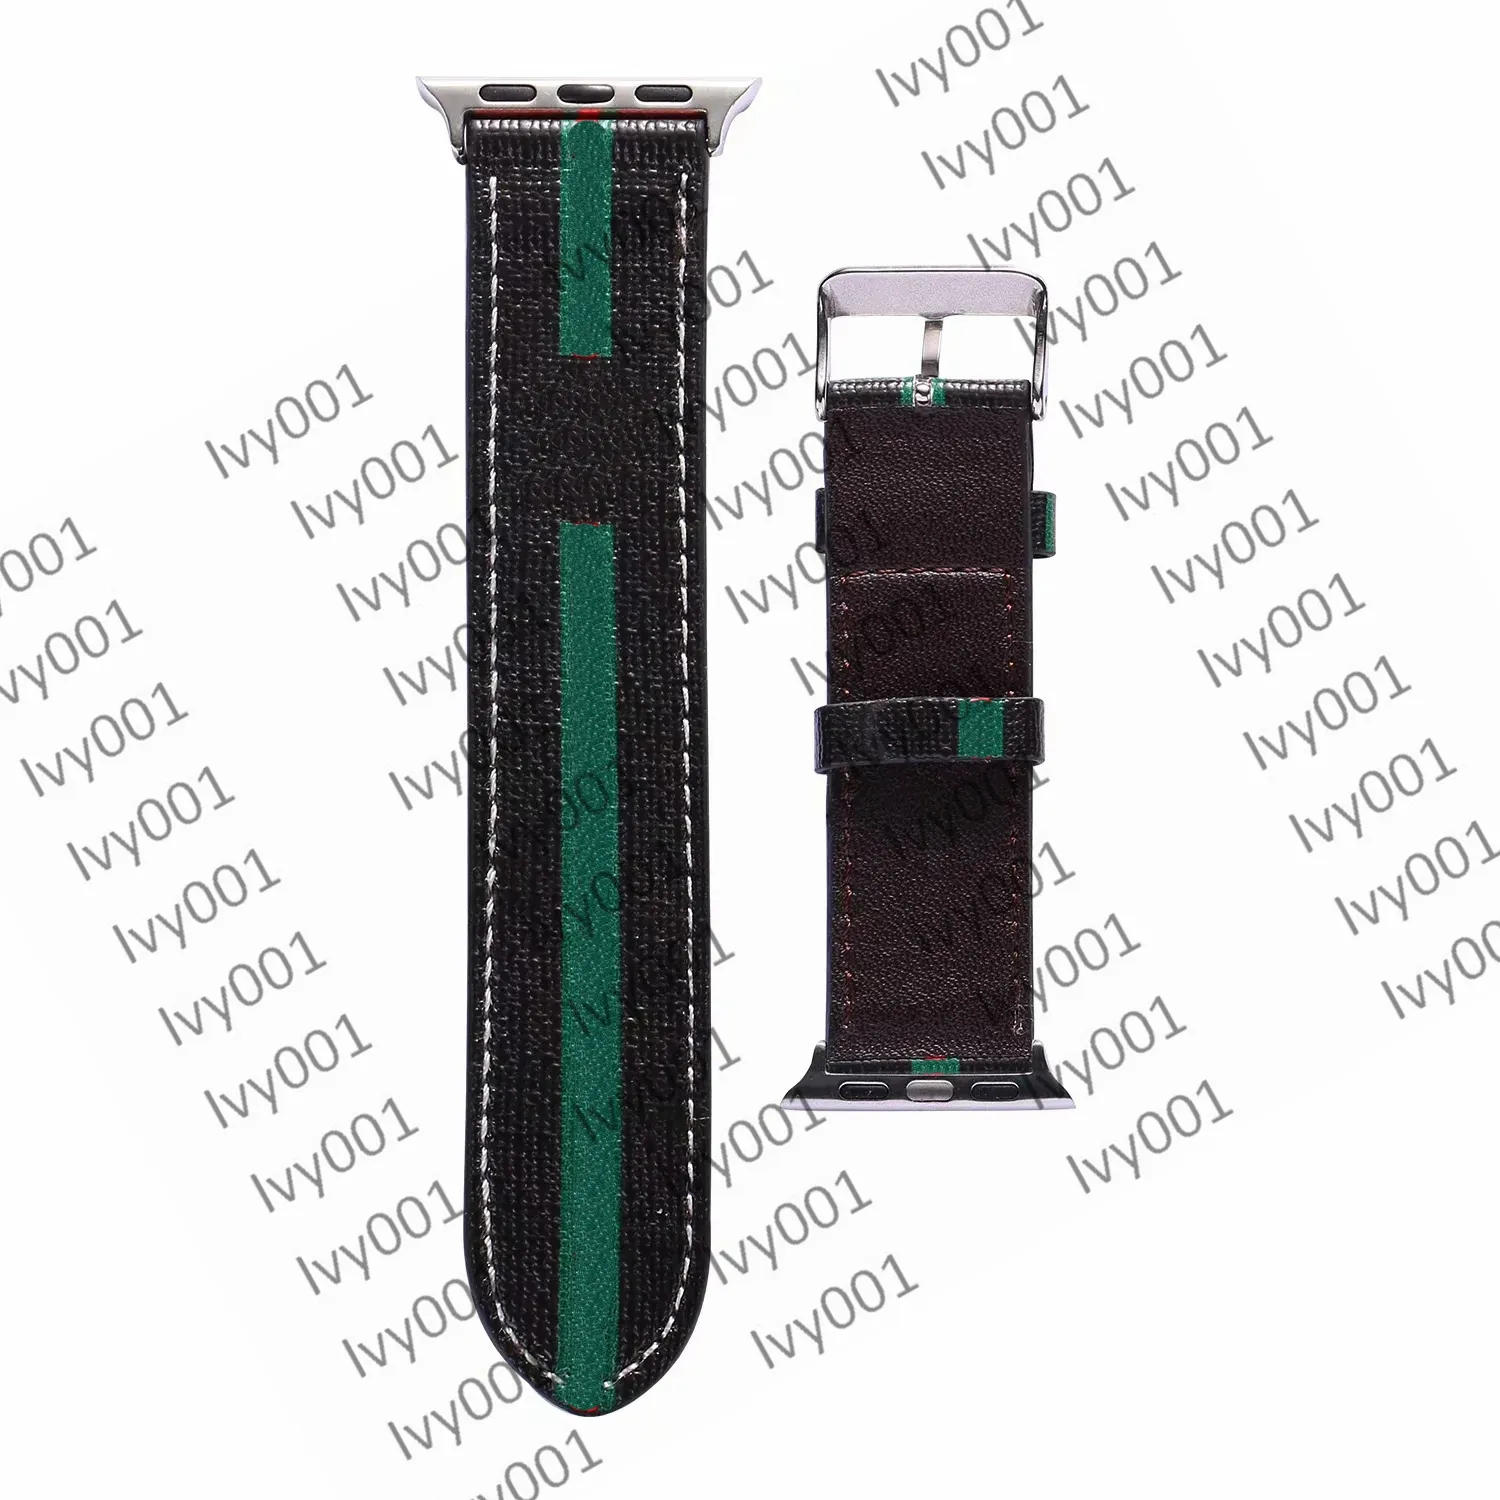 G fashion Strap Watchbands for Apple Watch Band 41mm 45mm 42mm 38mm 40mm 44mm iwatch 1 2 34 5 6 7 bands Leather Bracelet Fashion Stripes ivy001